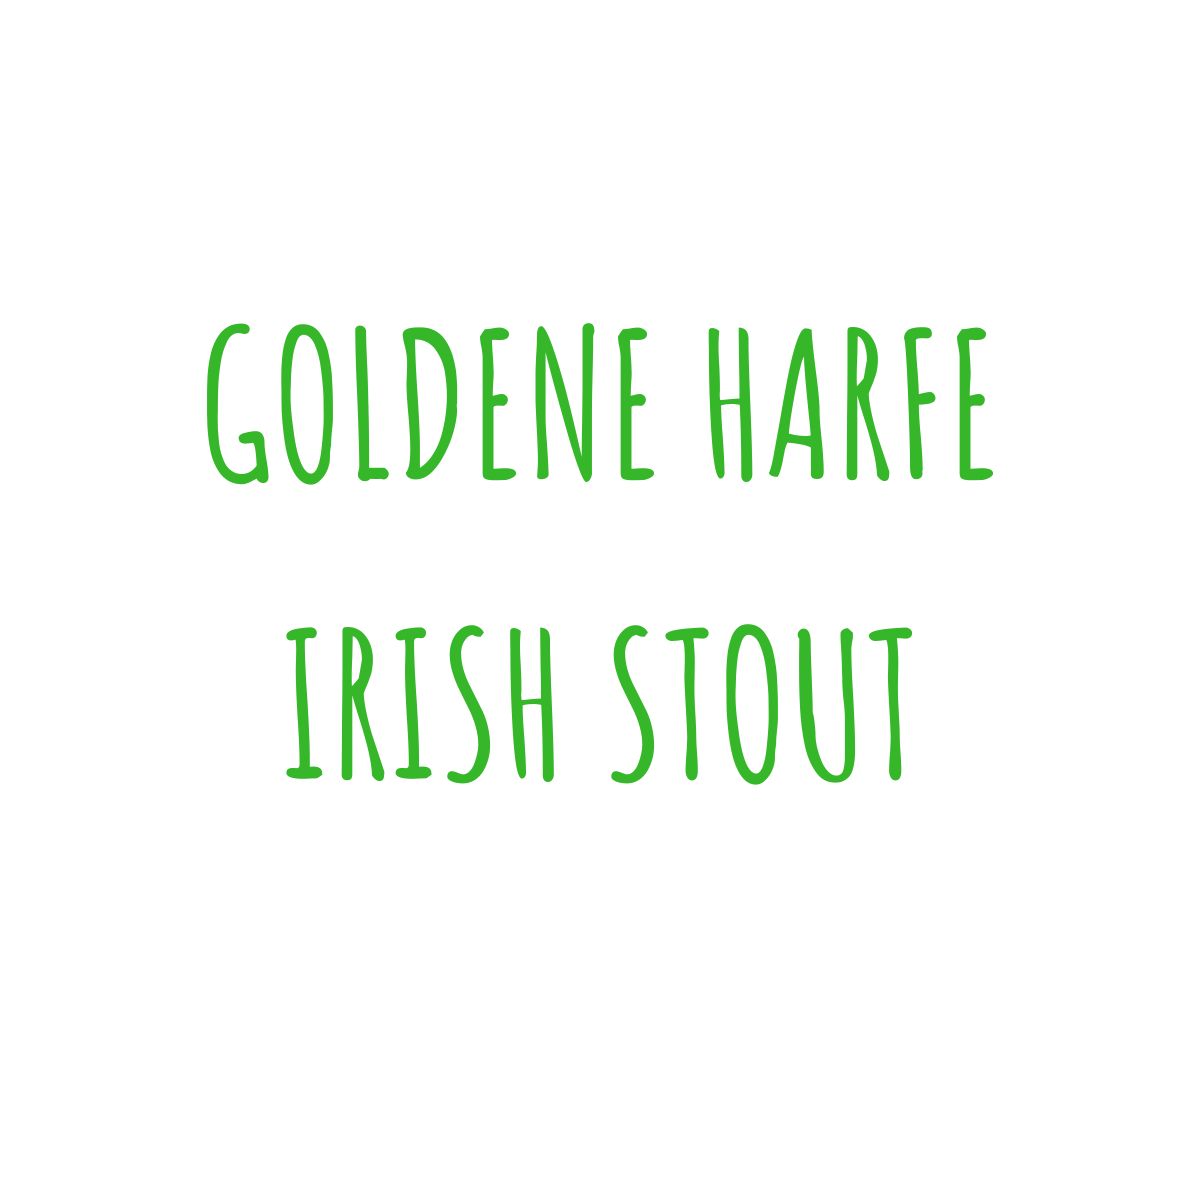 Goldene Harfe - Irish Stout